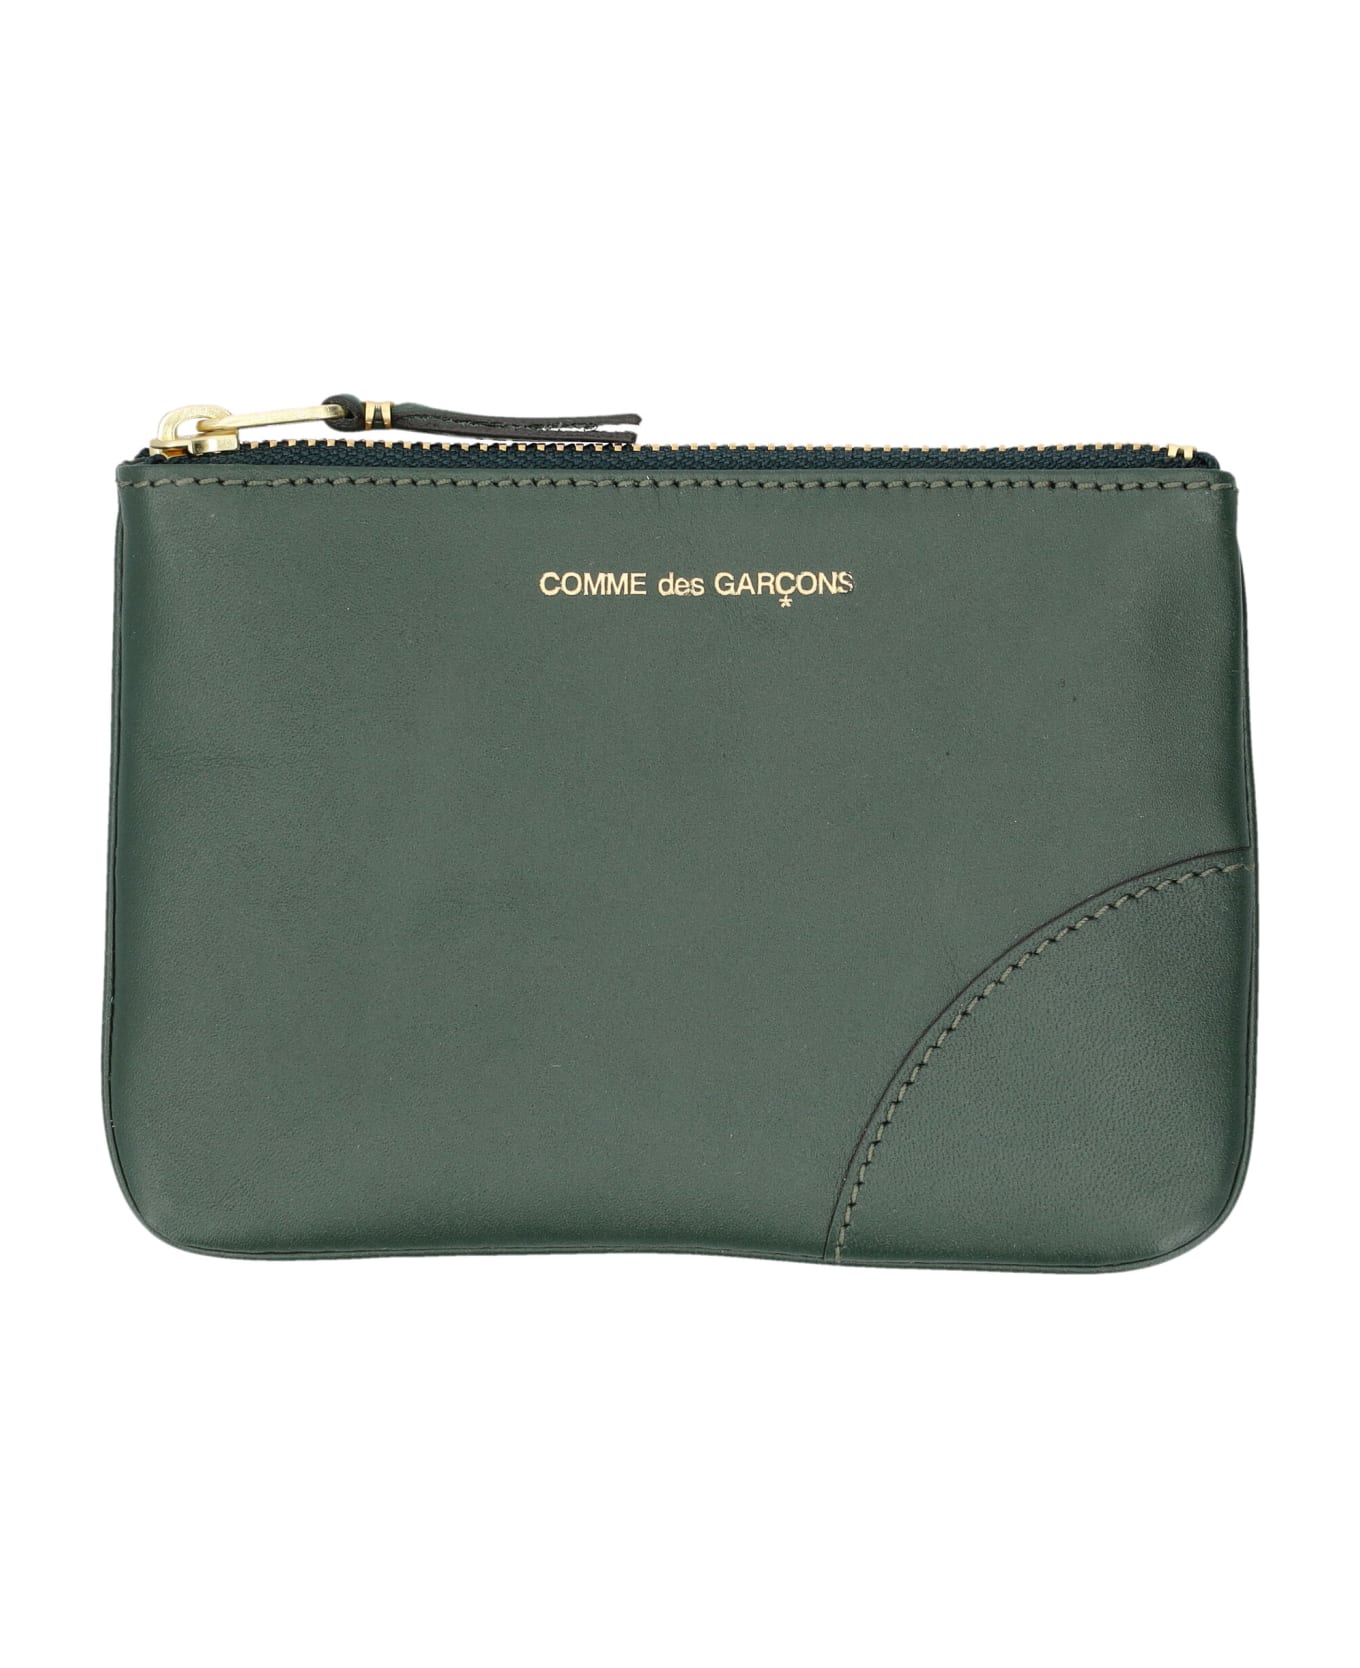 Comme des Garçons Wallet Xsmall Classic Leather Pouch - BOTTLE GREEN